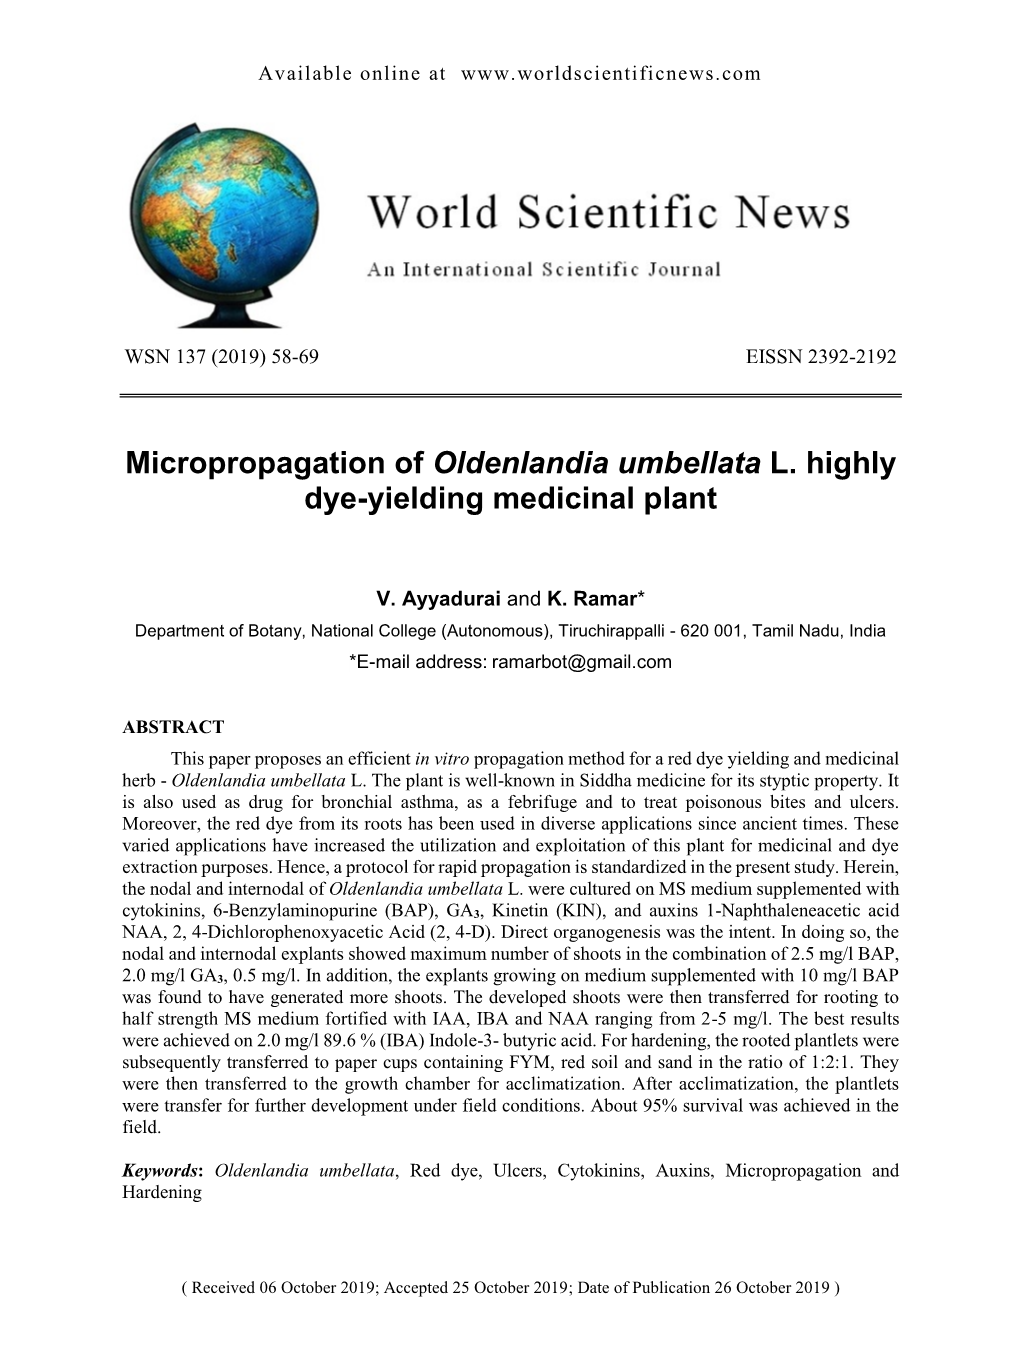 Micropropagation of Oldenlandia Umbellata L. Highly Dye-Yielding Medicinal Plant